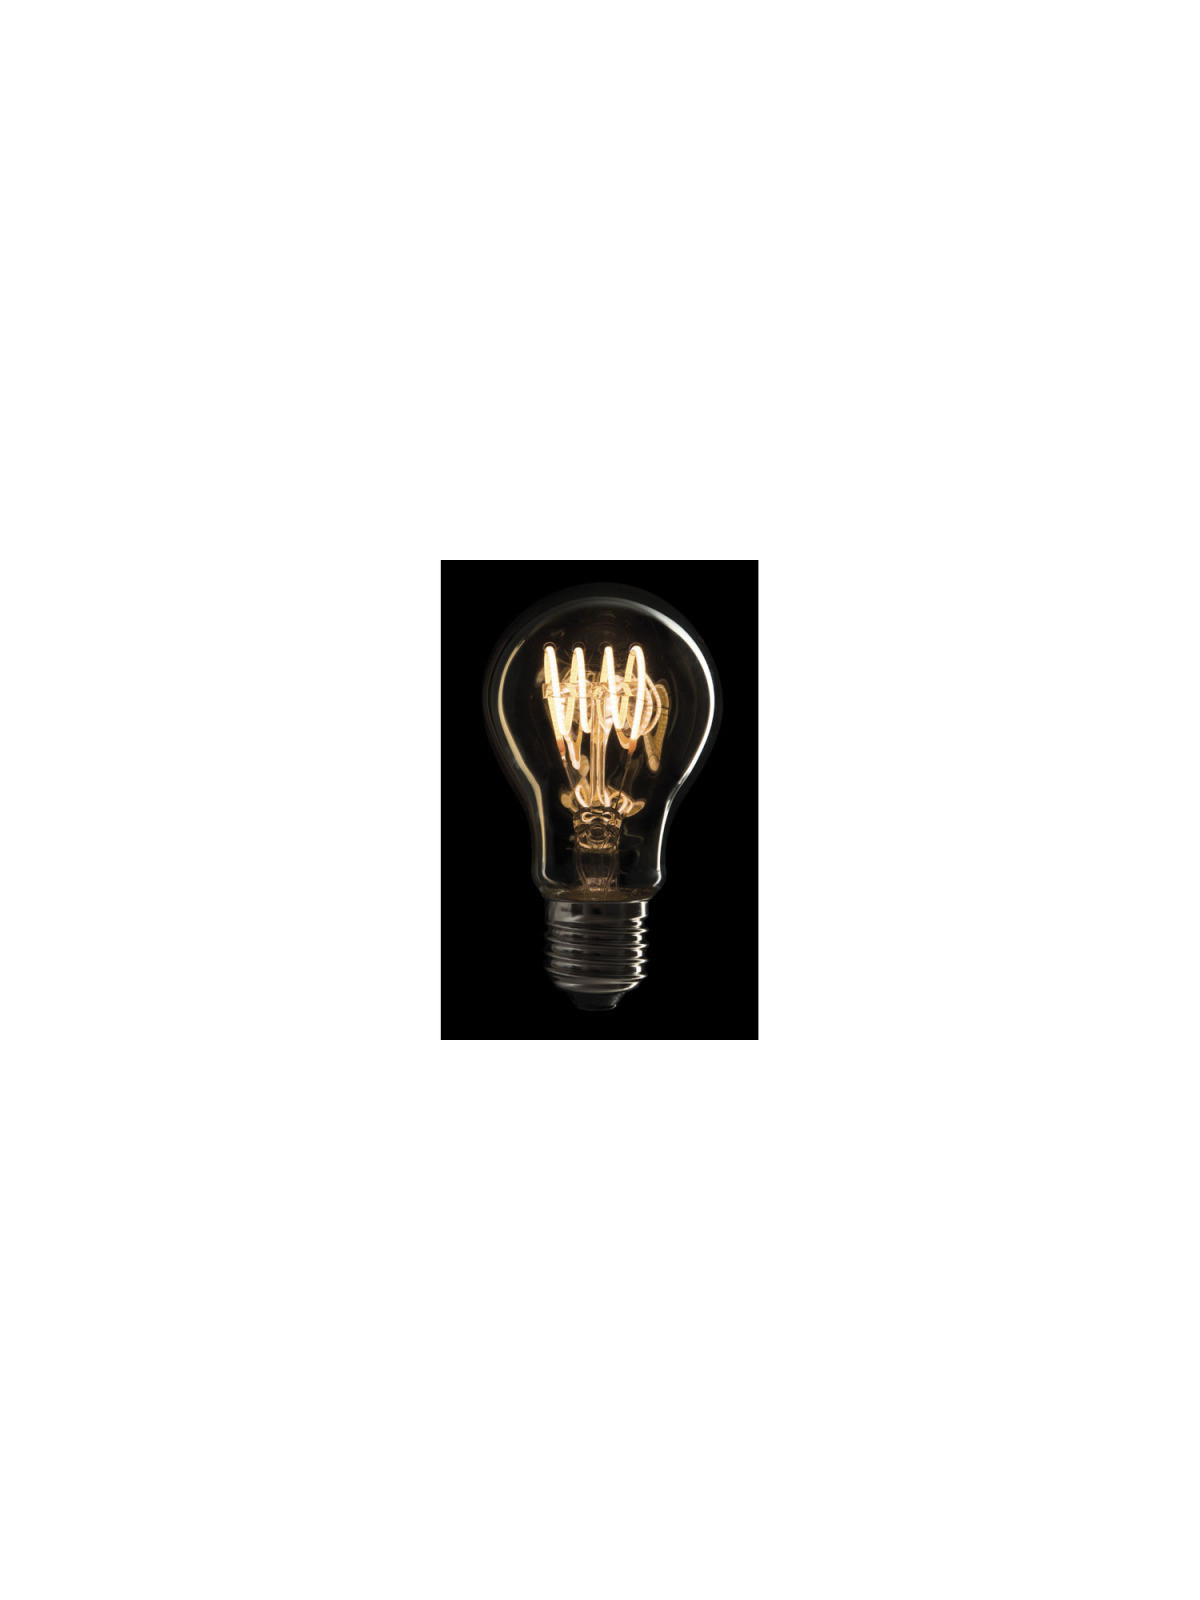 Showtec LED Filament Bulb E27